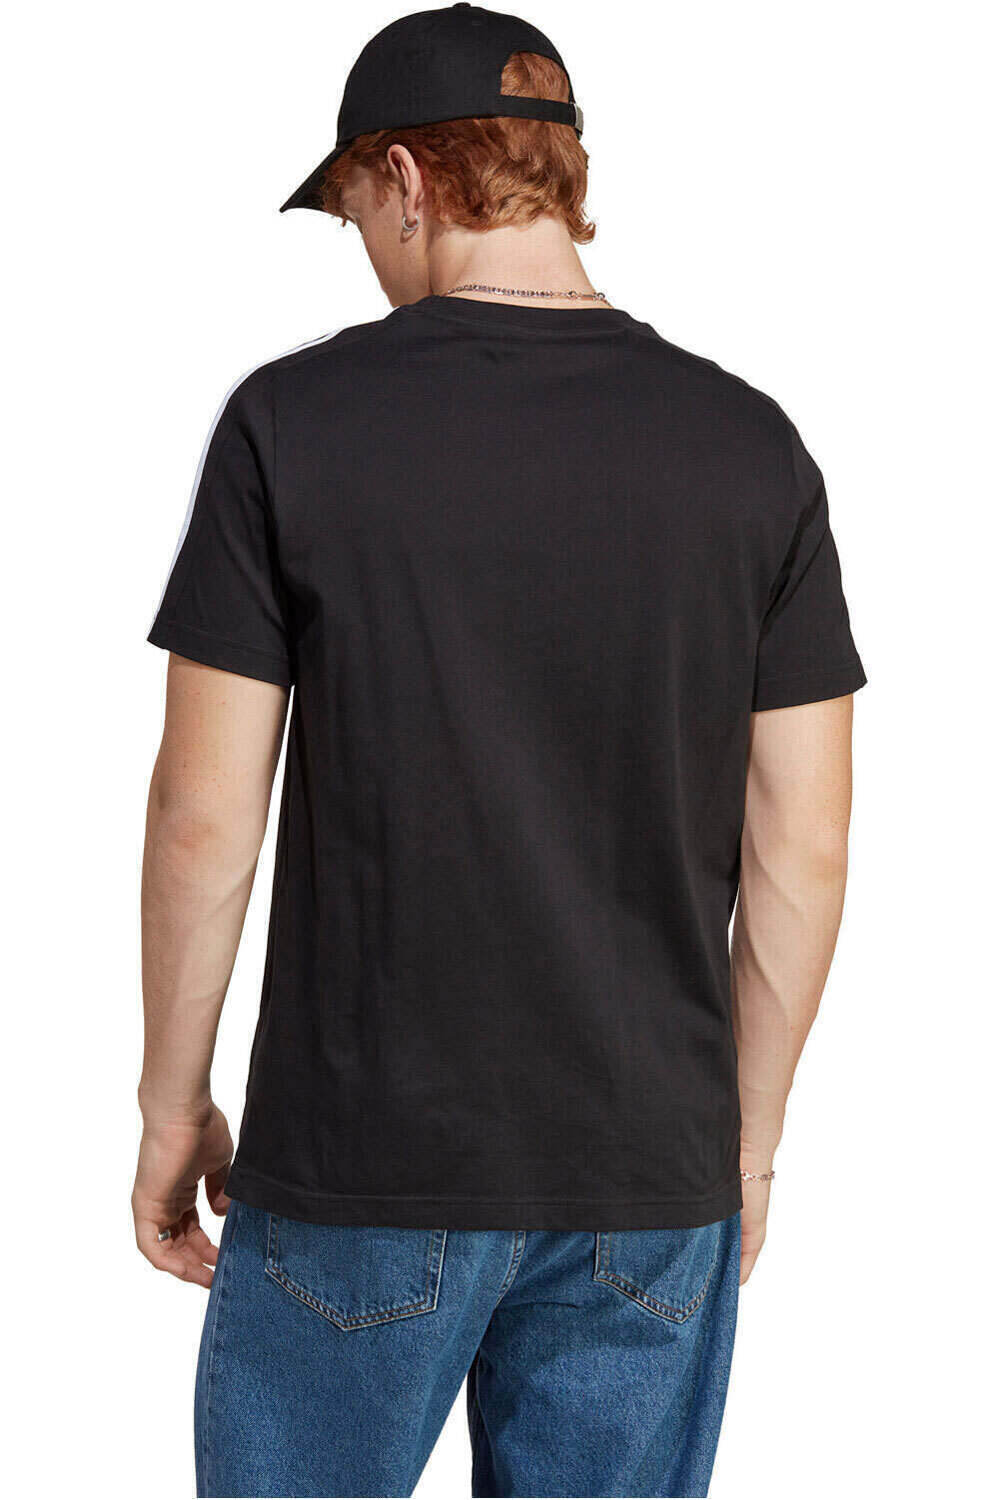 adidas camiseta manga corta hombre Essentials Single 3 bandas vista trasera